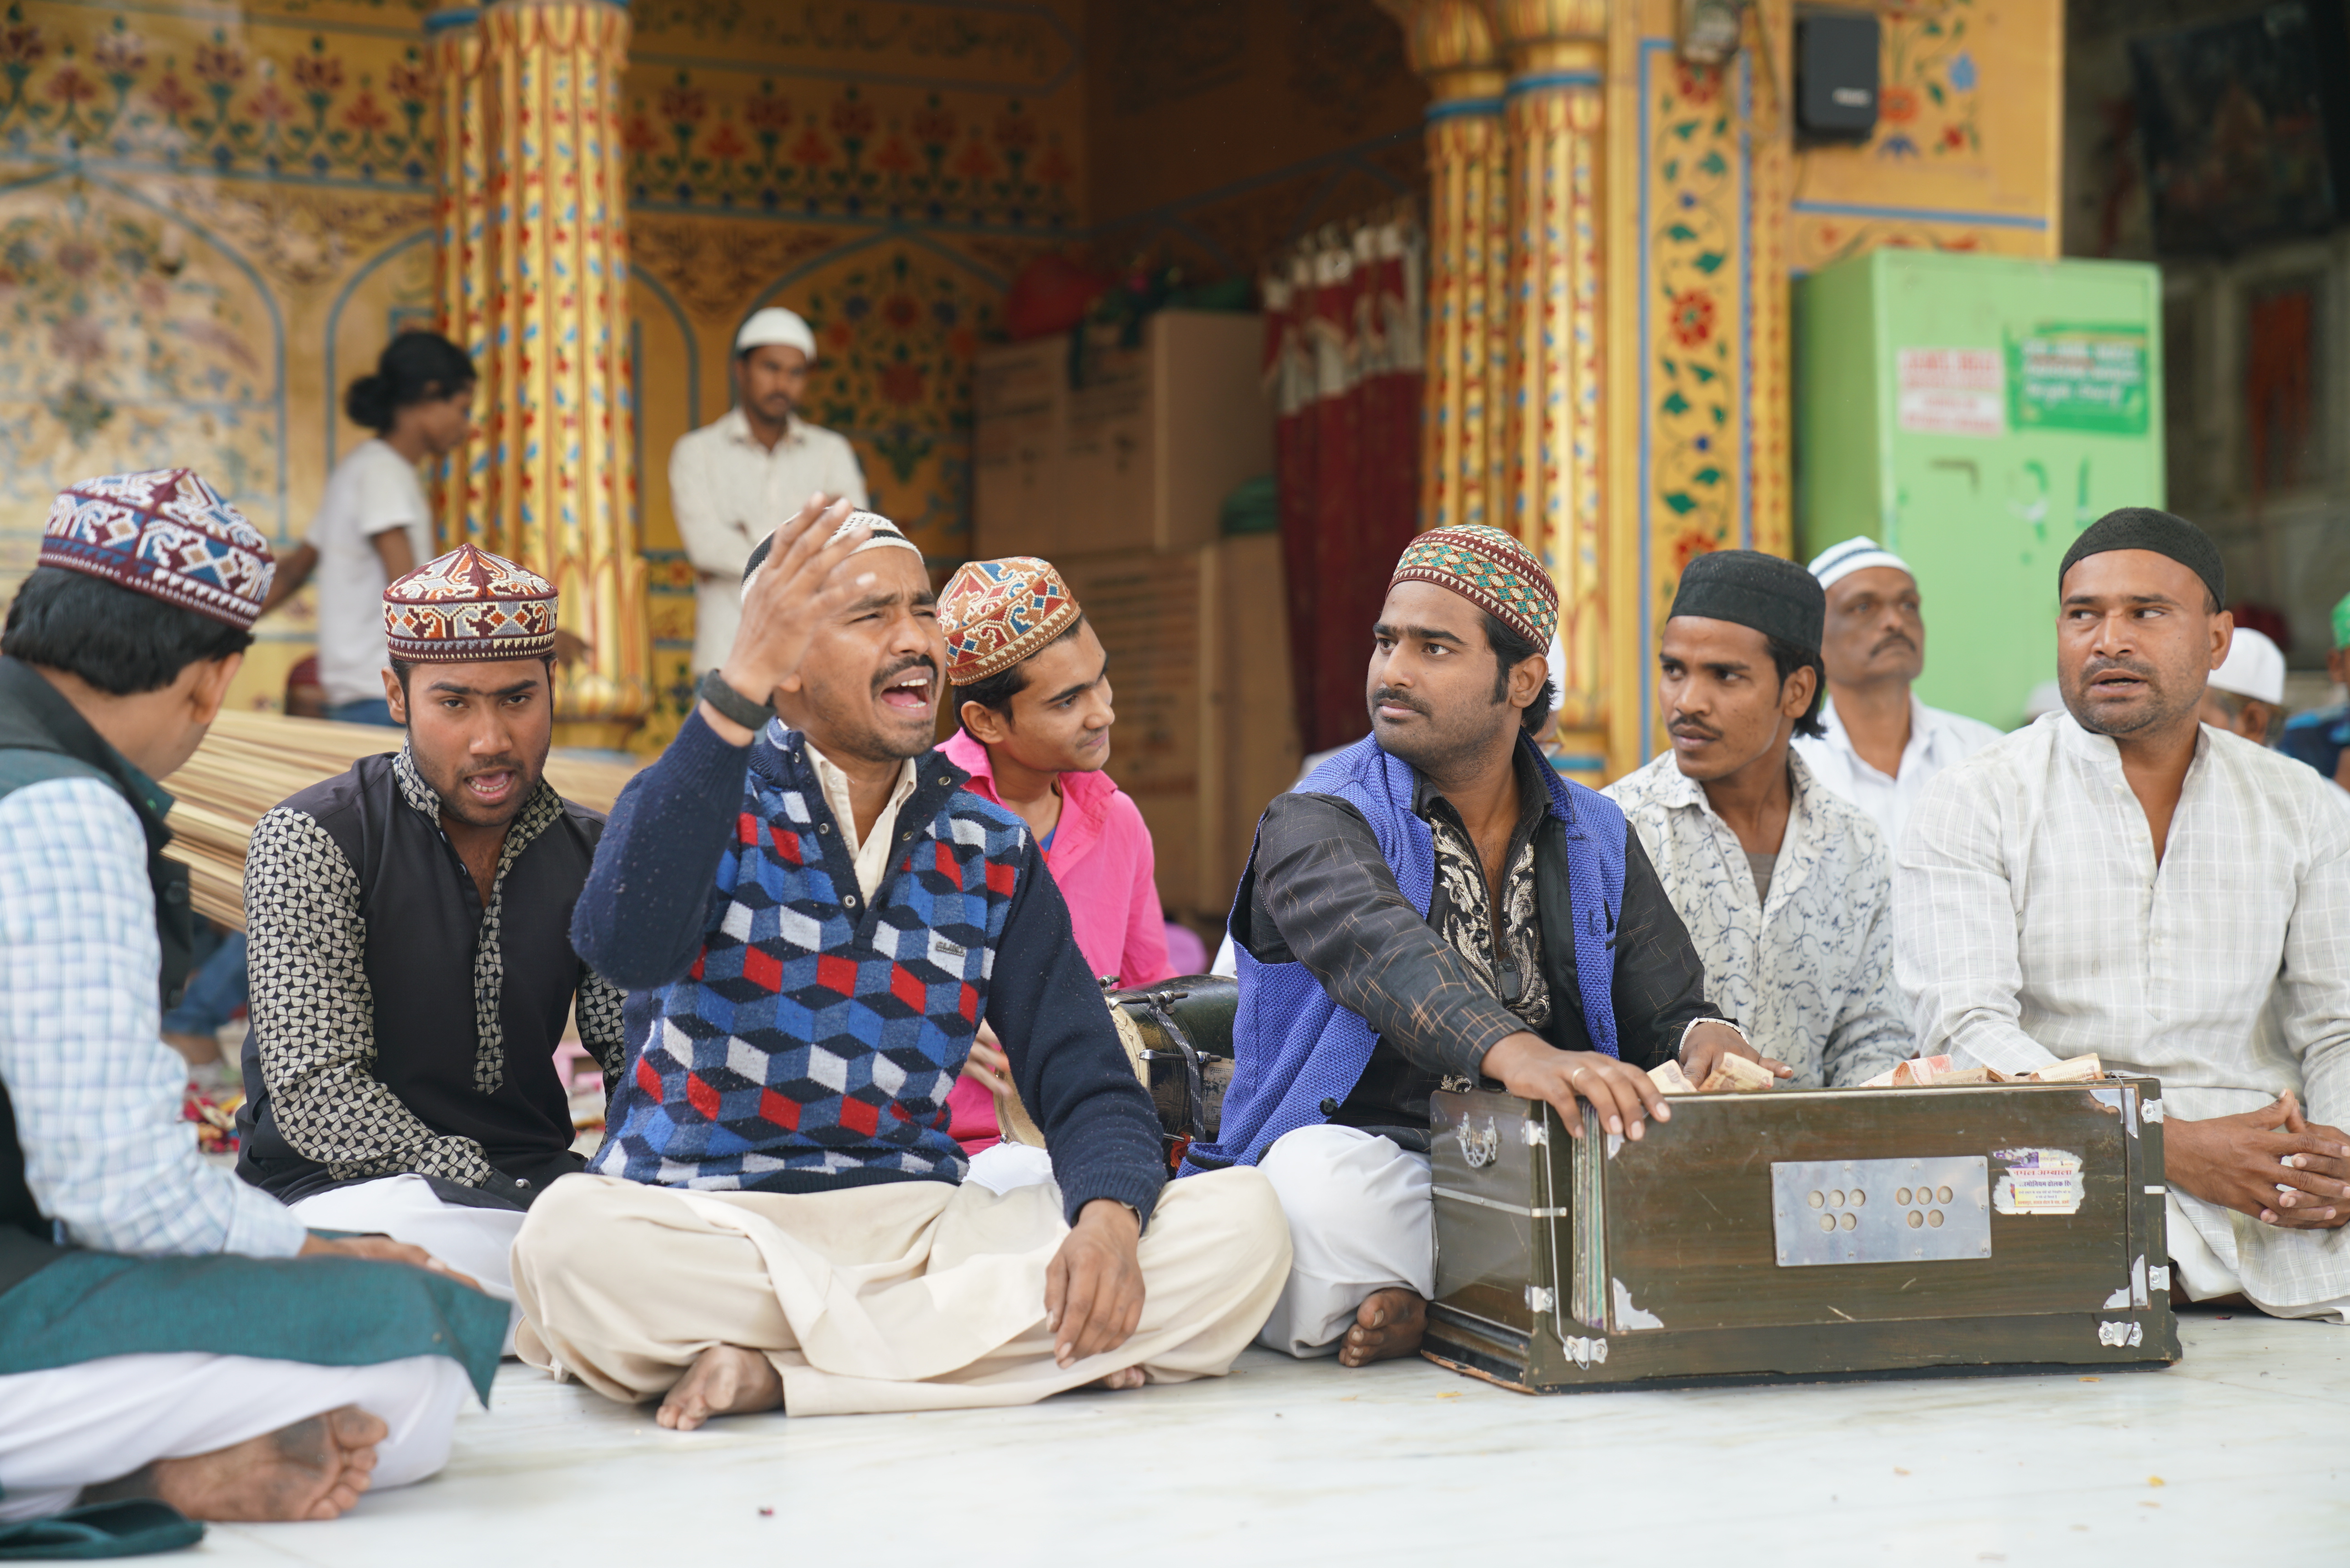 Qawwali musicians in the courtyard of the shrine of Moinuddin Chishti in Ajmer, India (photo: Marian Brehmer)